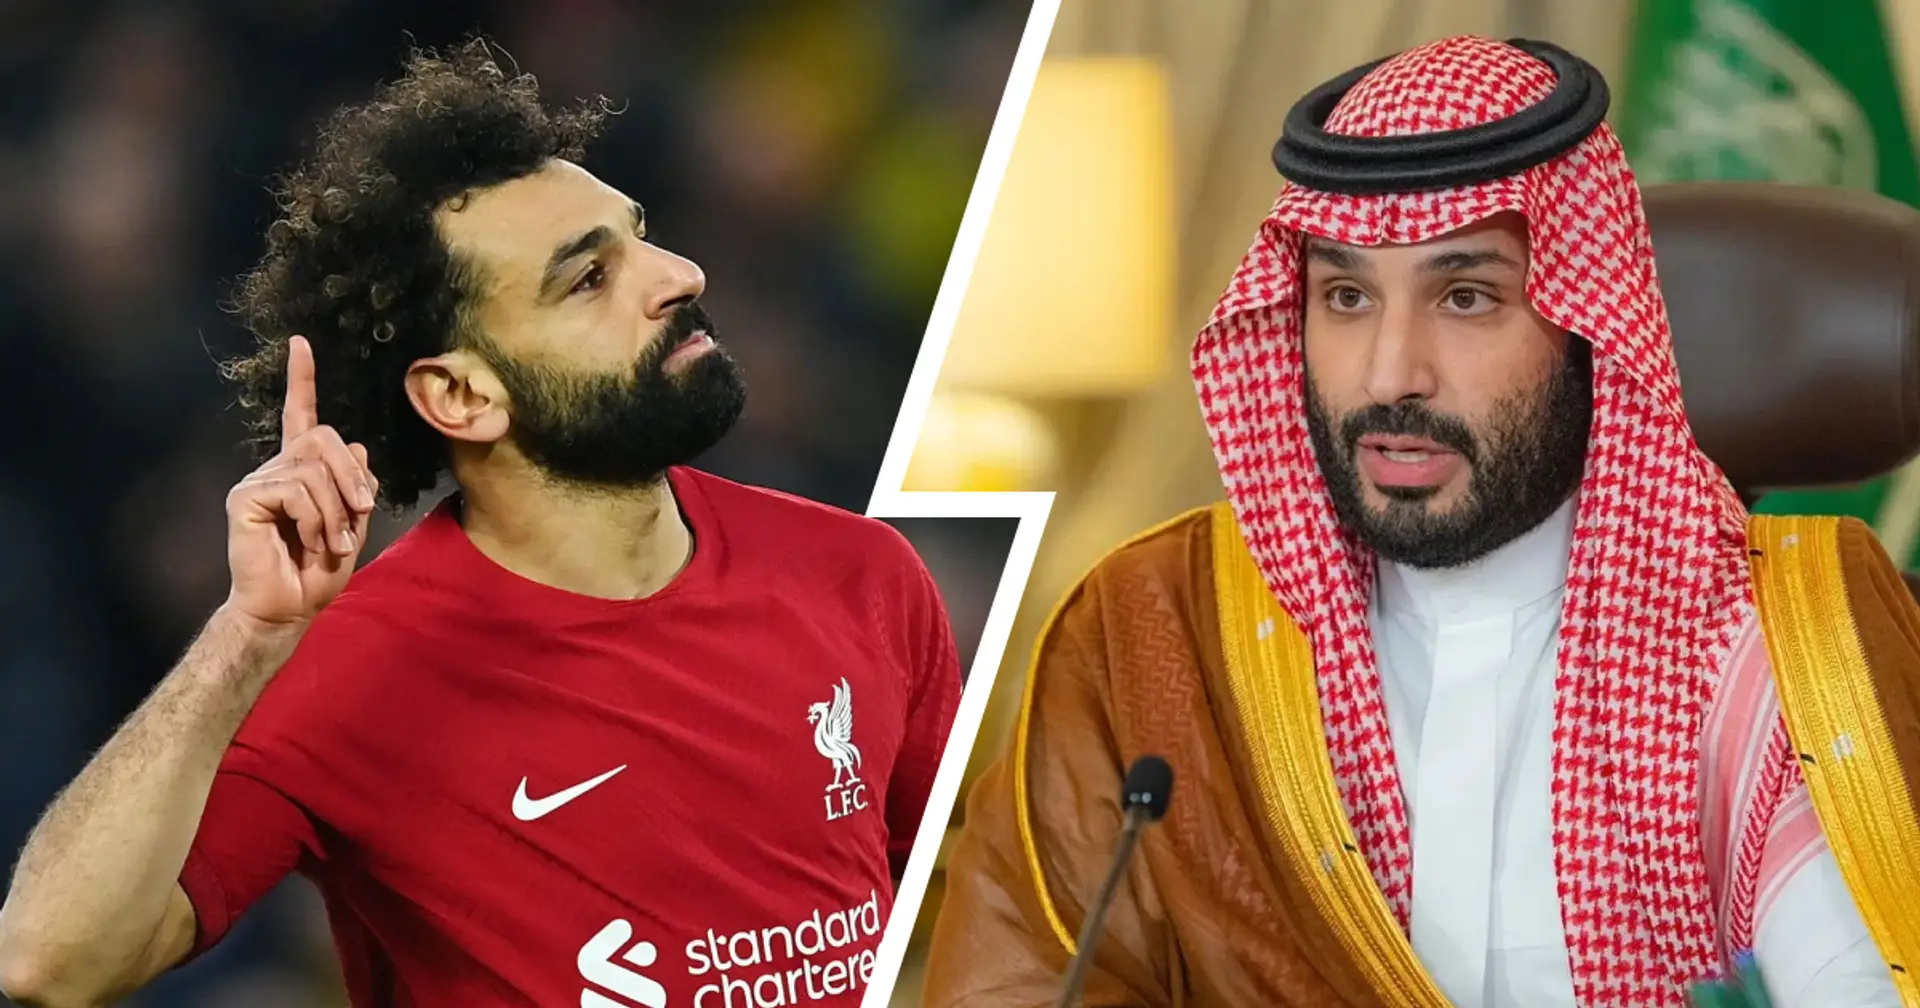 Saudi Pro League make plans for Mohamed Salah signing, timeline revealed (reliability: 3 stars)